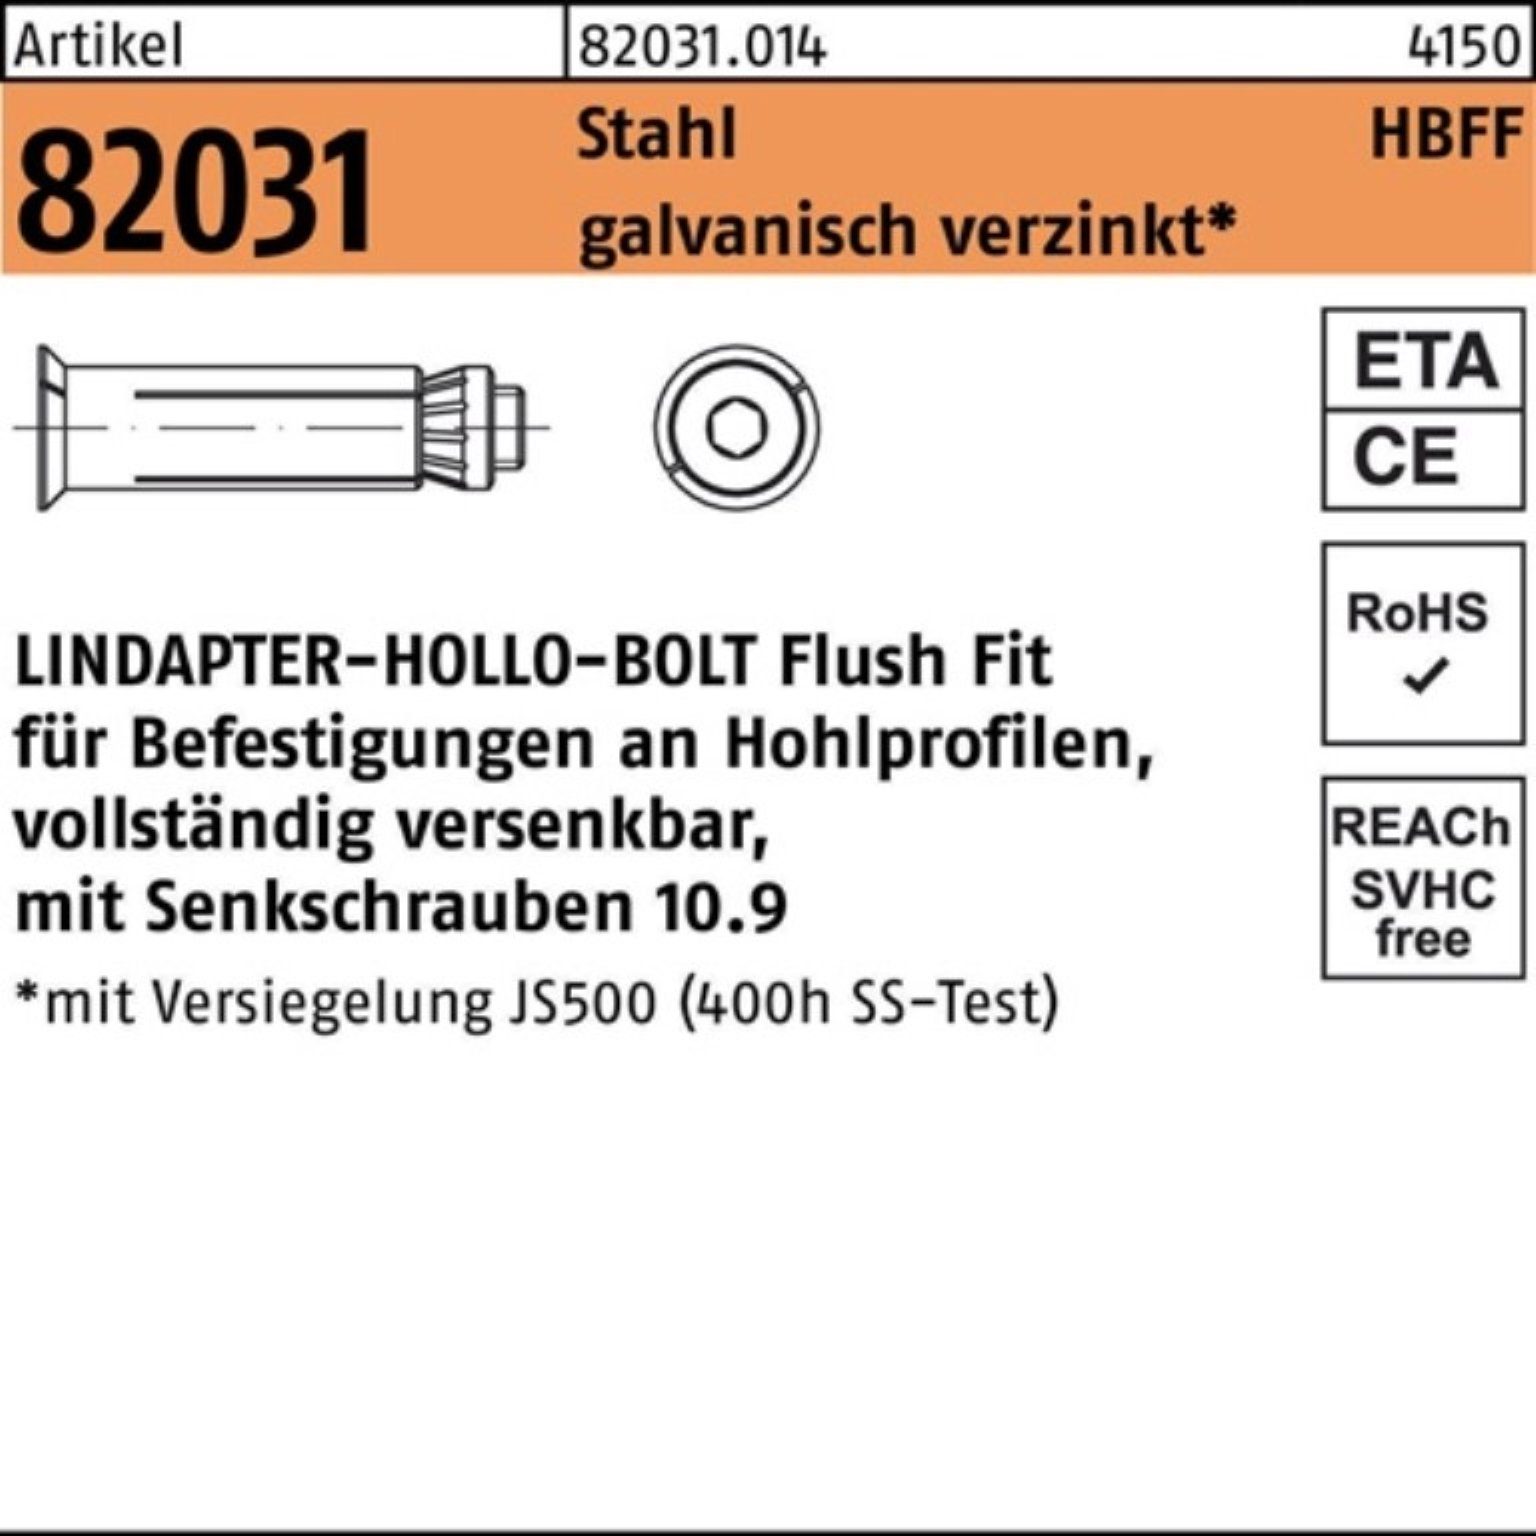 Pack (90/64) Hohlraumdübel 1 Hohlraumdübel R Lindapter 10.9 HBFF 08-3 galv.verz. 100er 82031